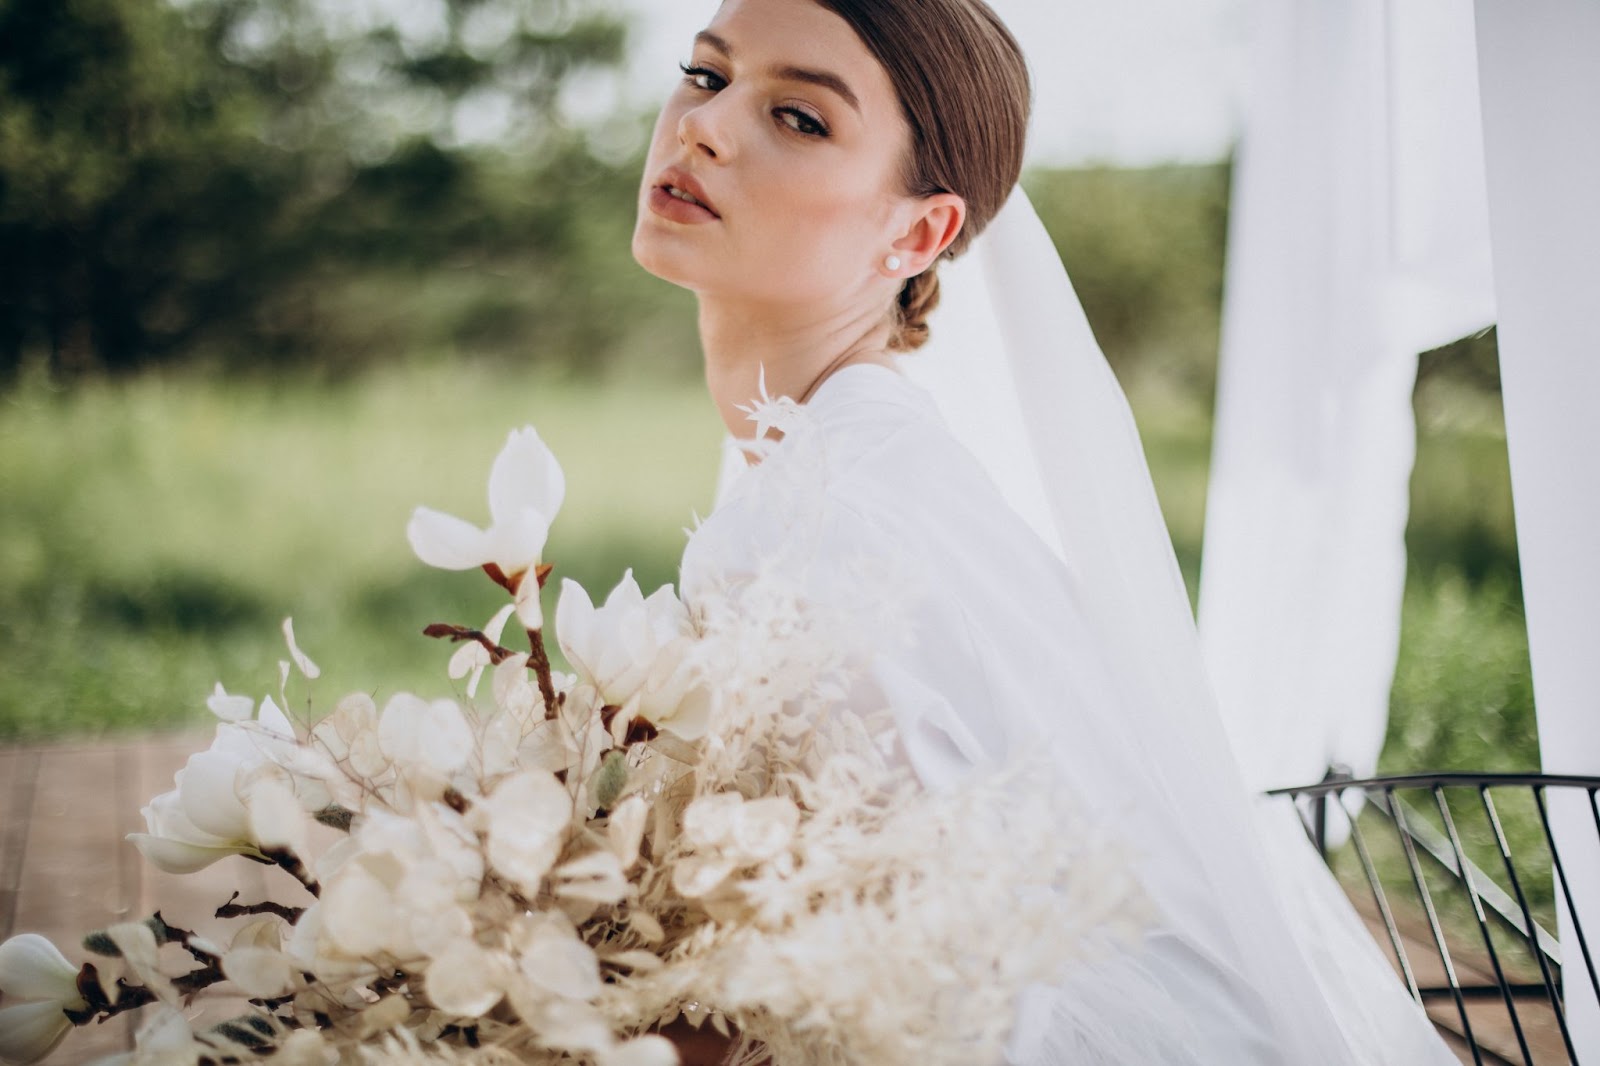 Bride with big bouquet of flowers showing off her wedding makeup look